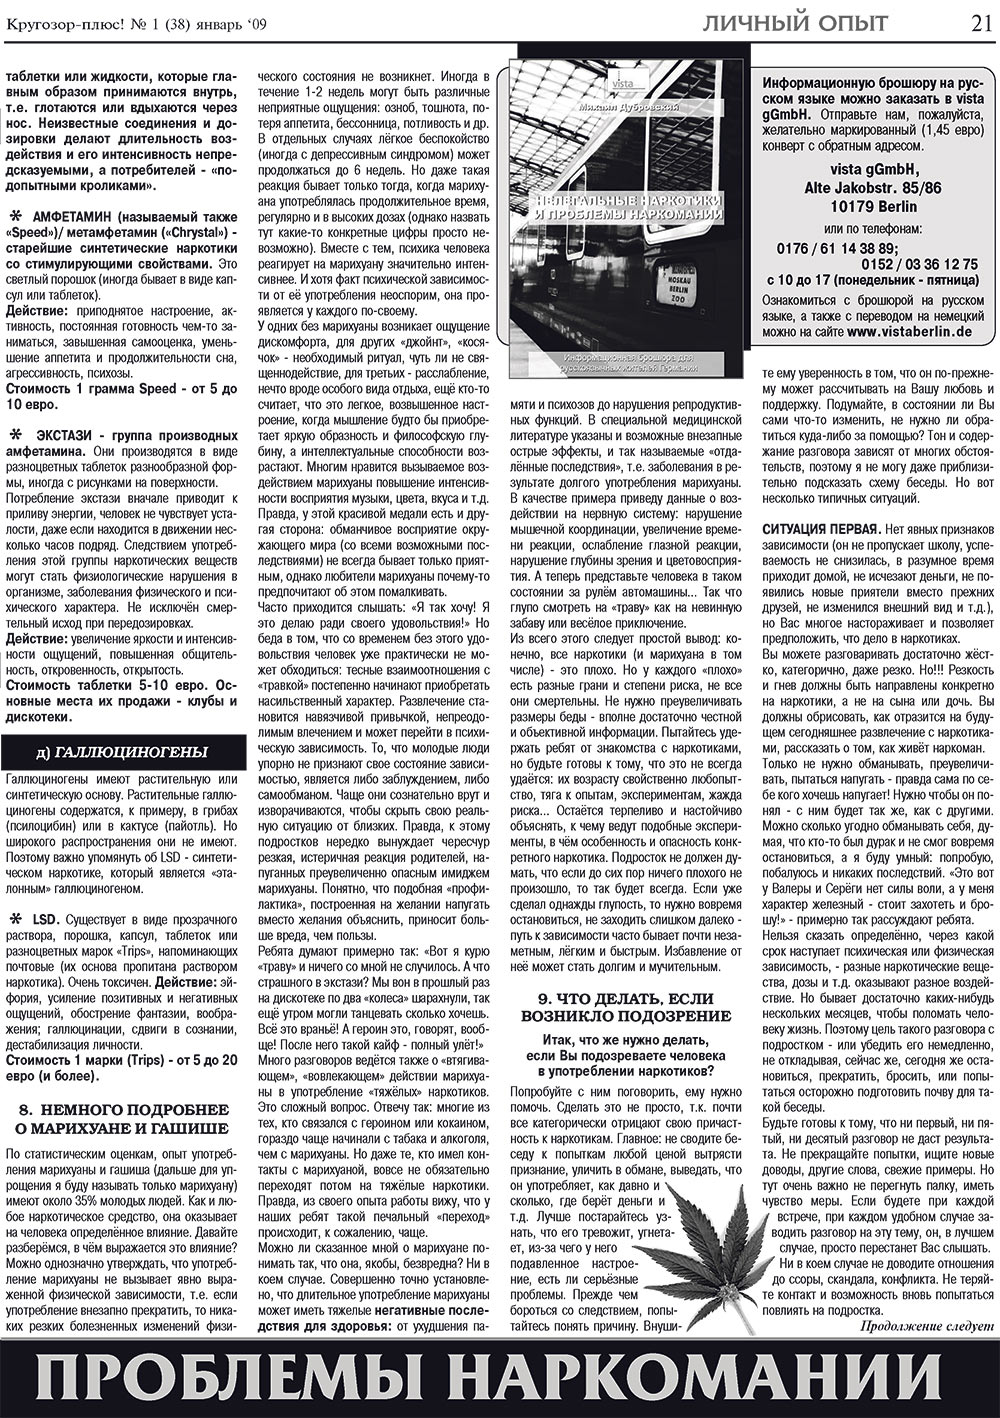 Кругозор плюс! (газета). 2009 год, номер 1, стр. 21